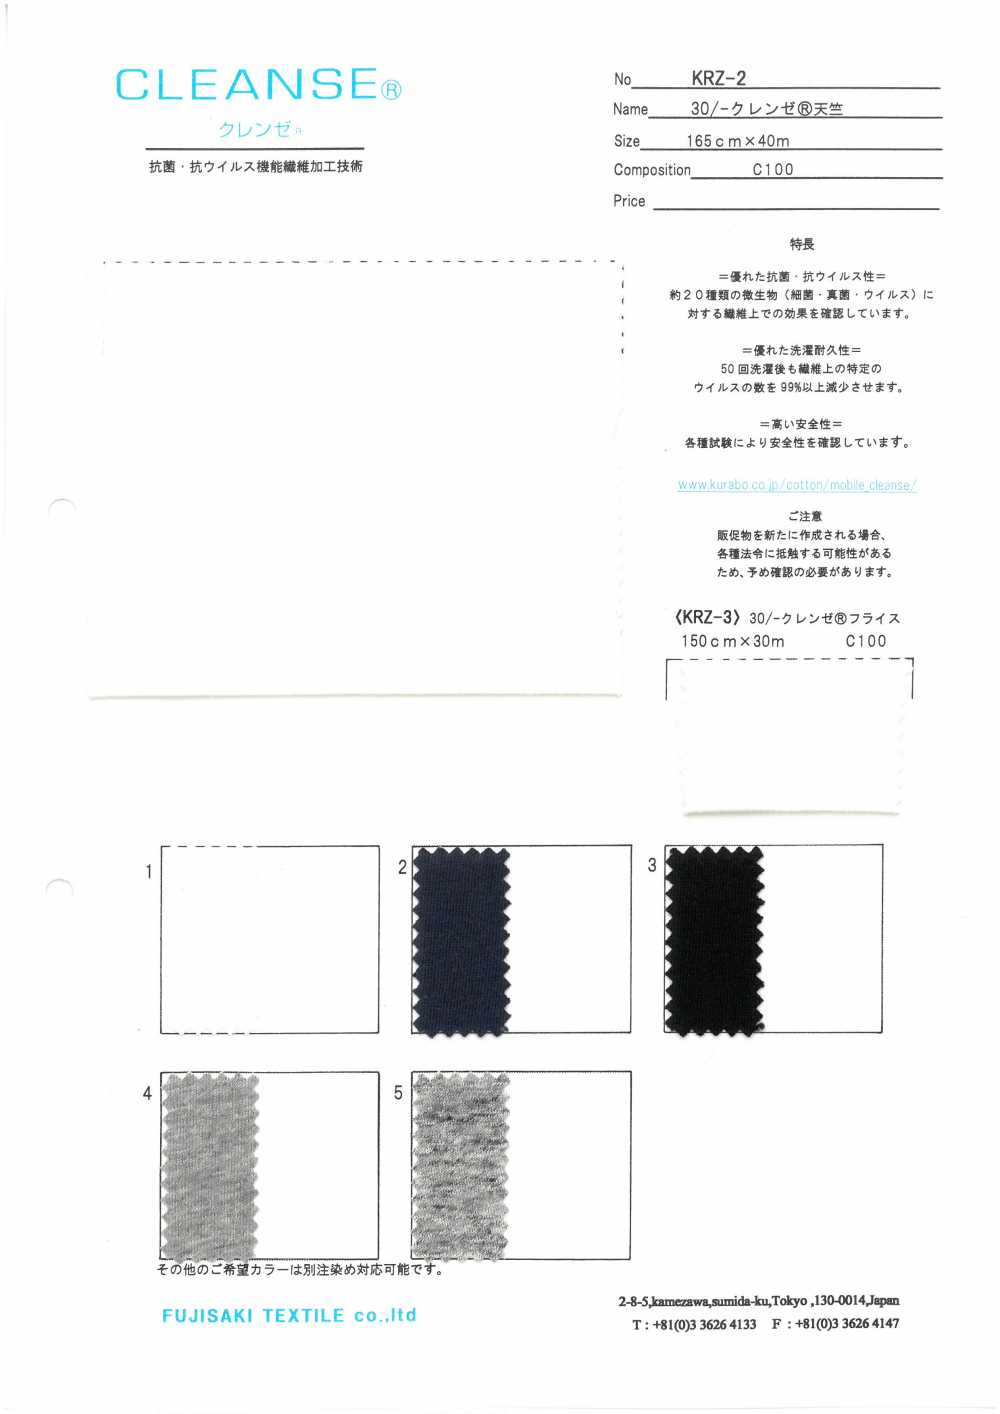 KRZ-2 30/- LIMPIEZA&# Jersey;[Fabrica Textil] Fujisaki Textile